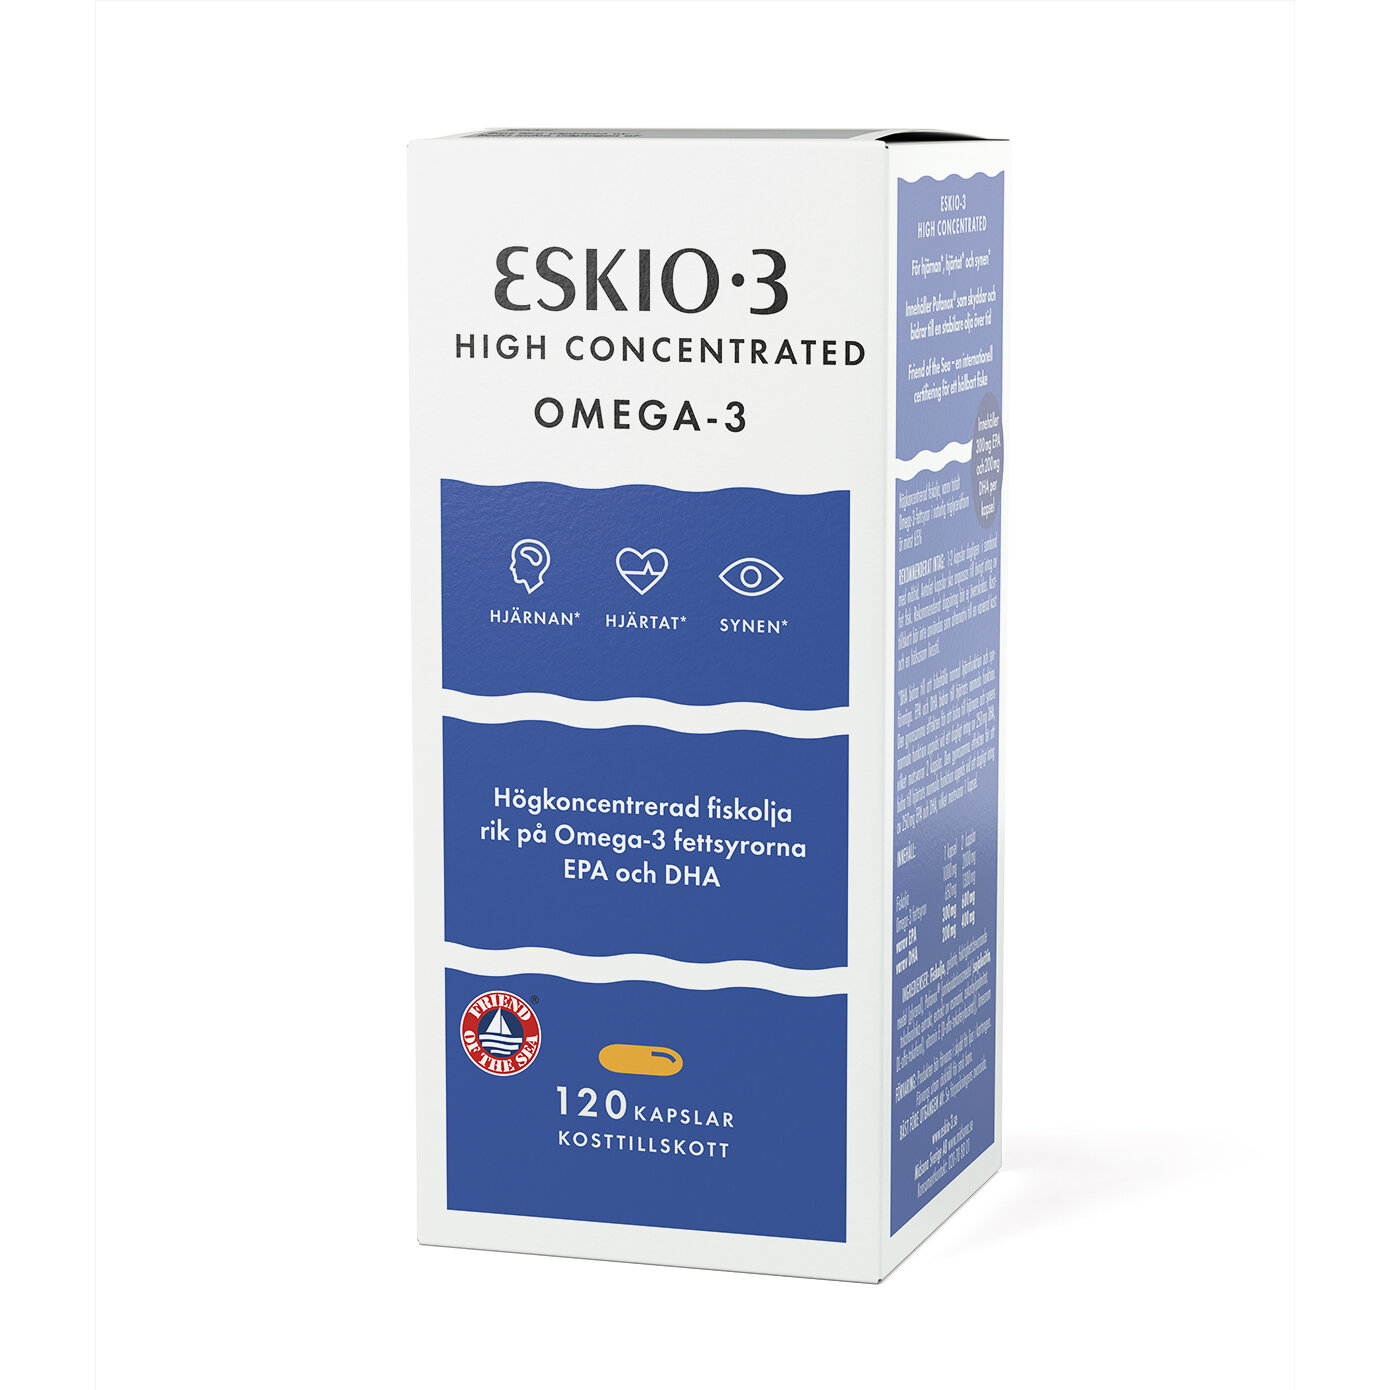 Eskio-3 High Concentrated